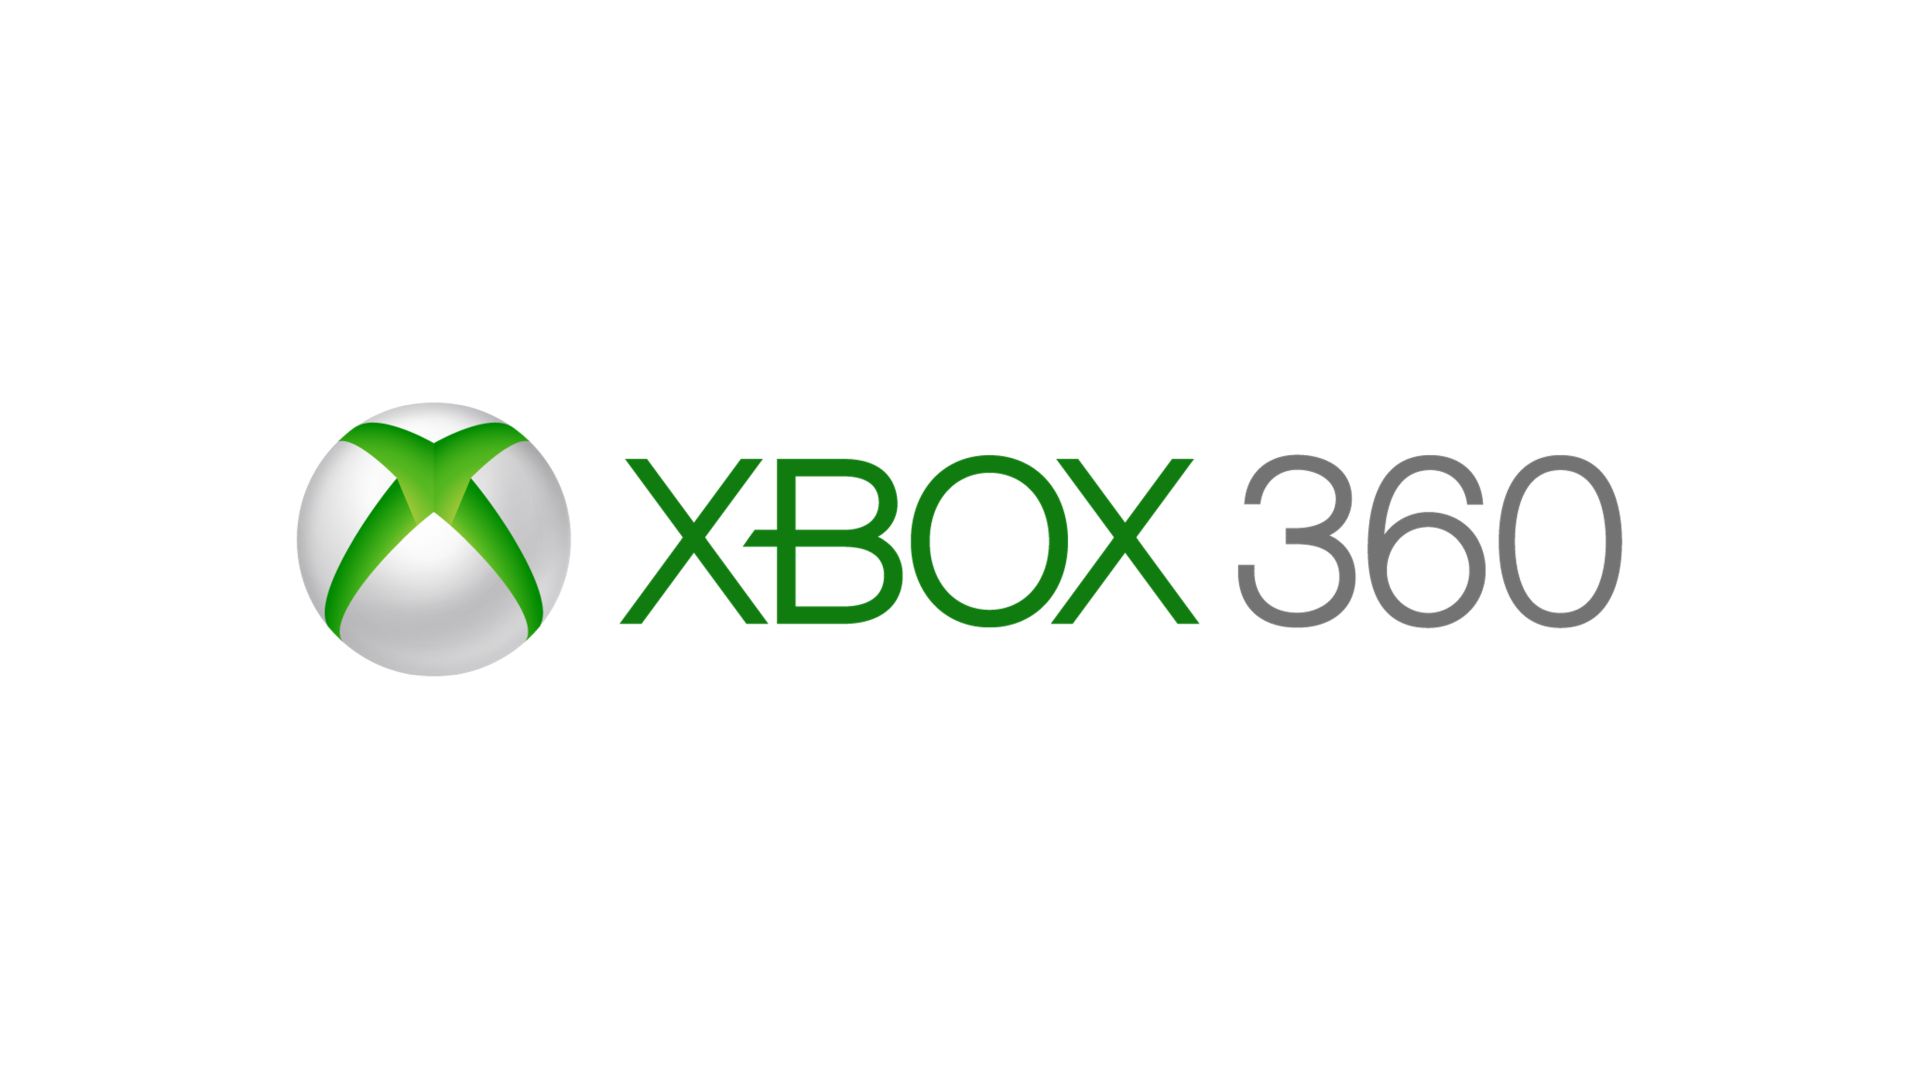 Xbox 360 Marketplace shut down